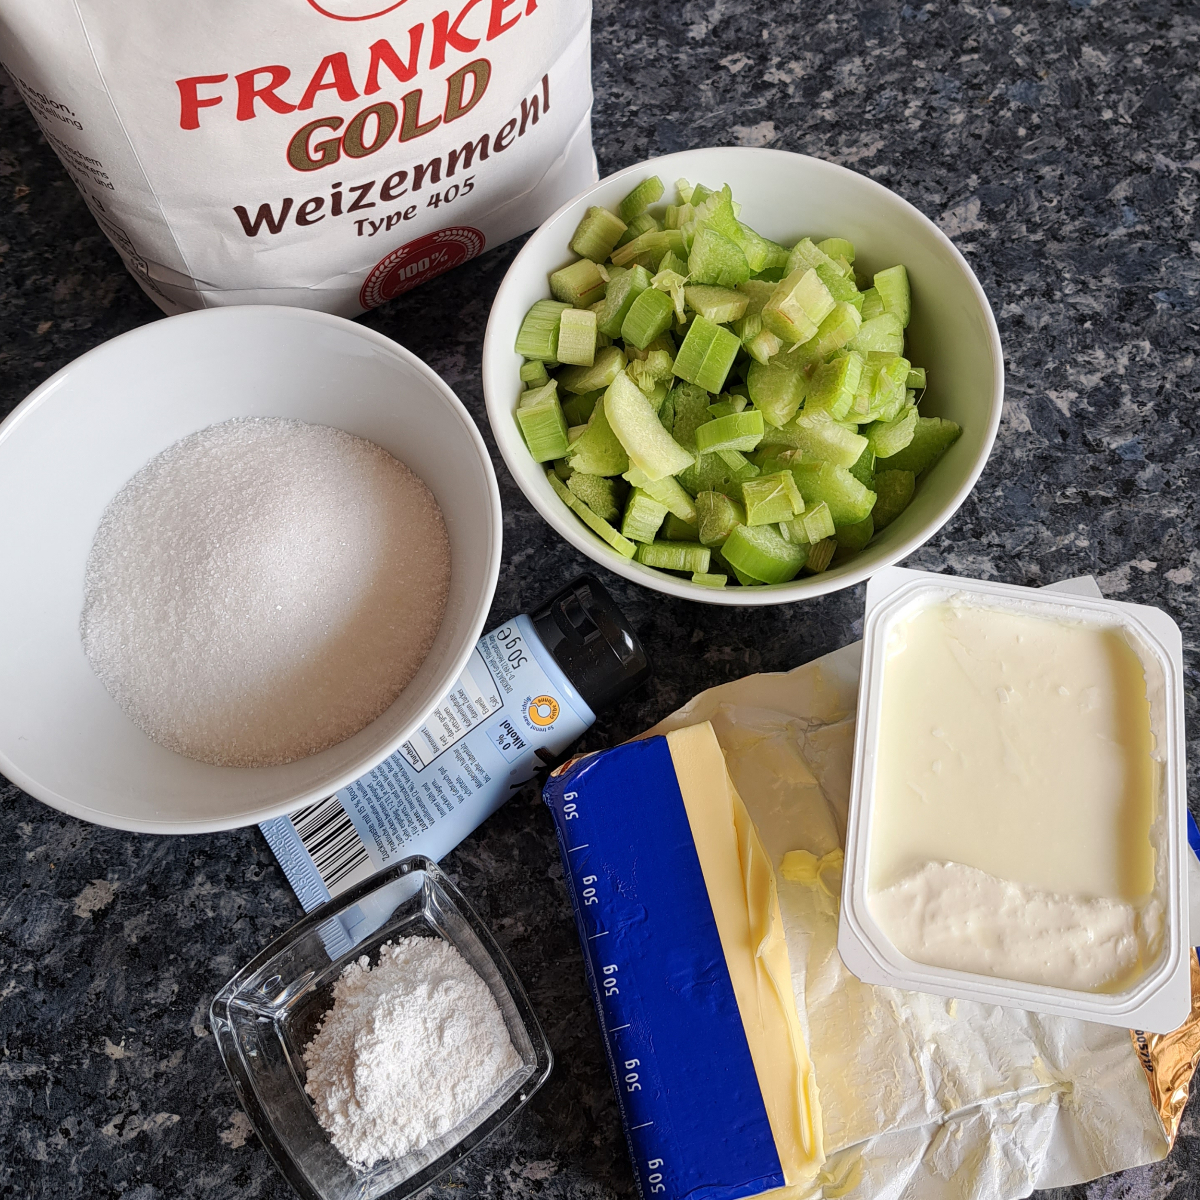 Ingredients used to make sweet German rolls with quark and rhubarb.